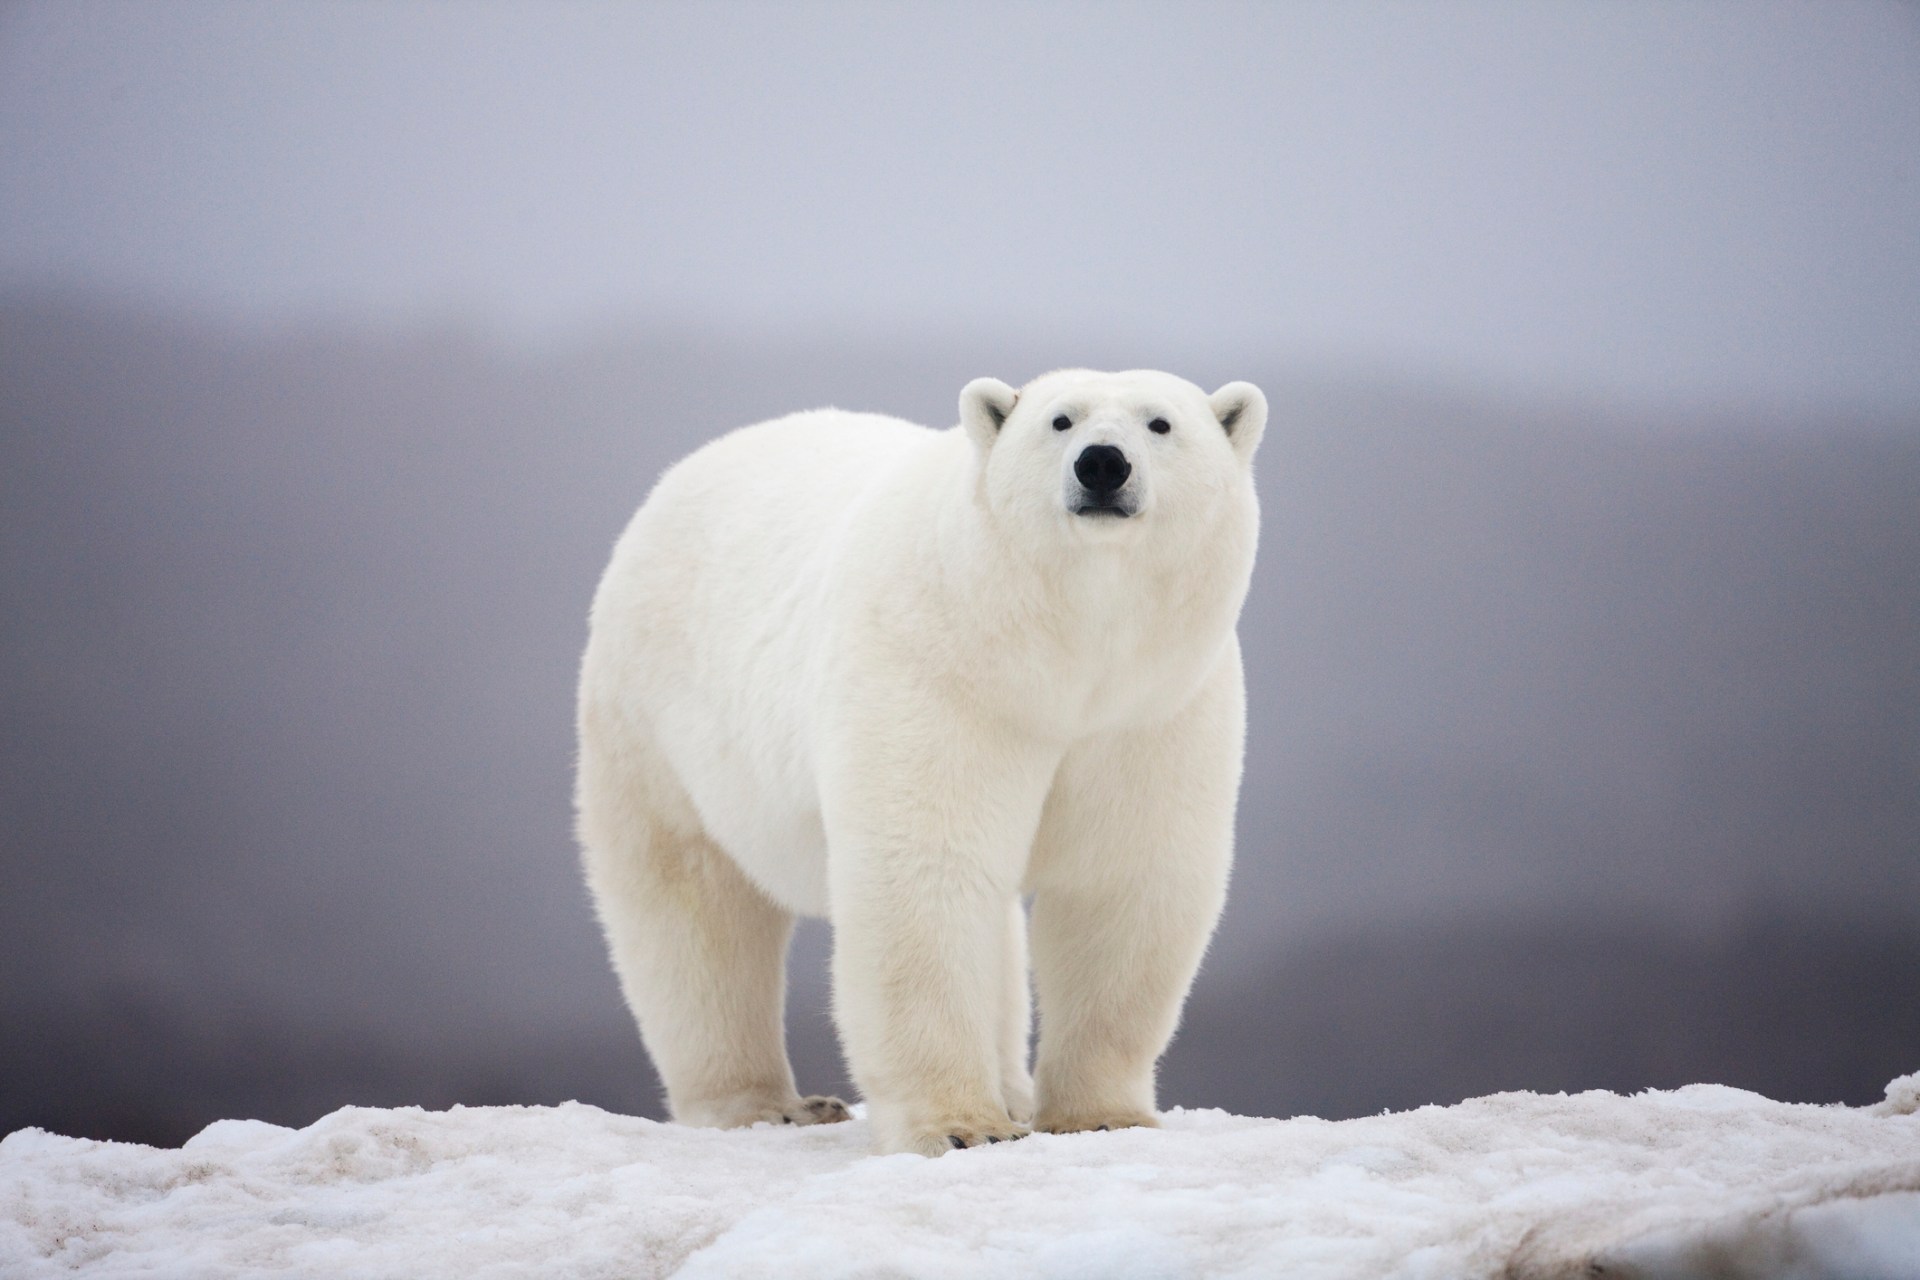 bird flu kills first polar bear as disease continues to spread